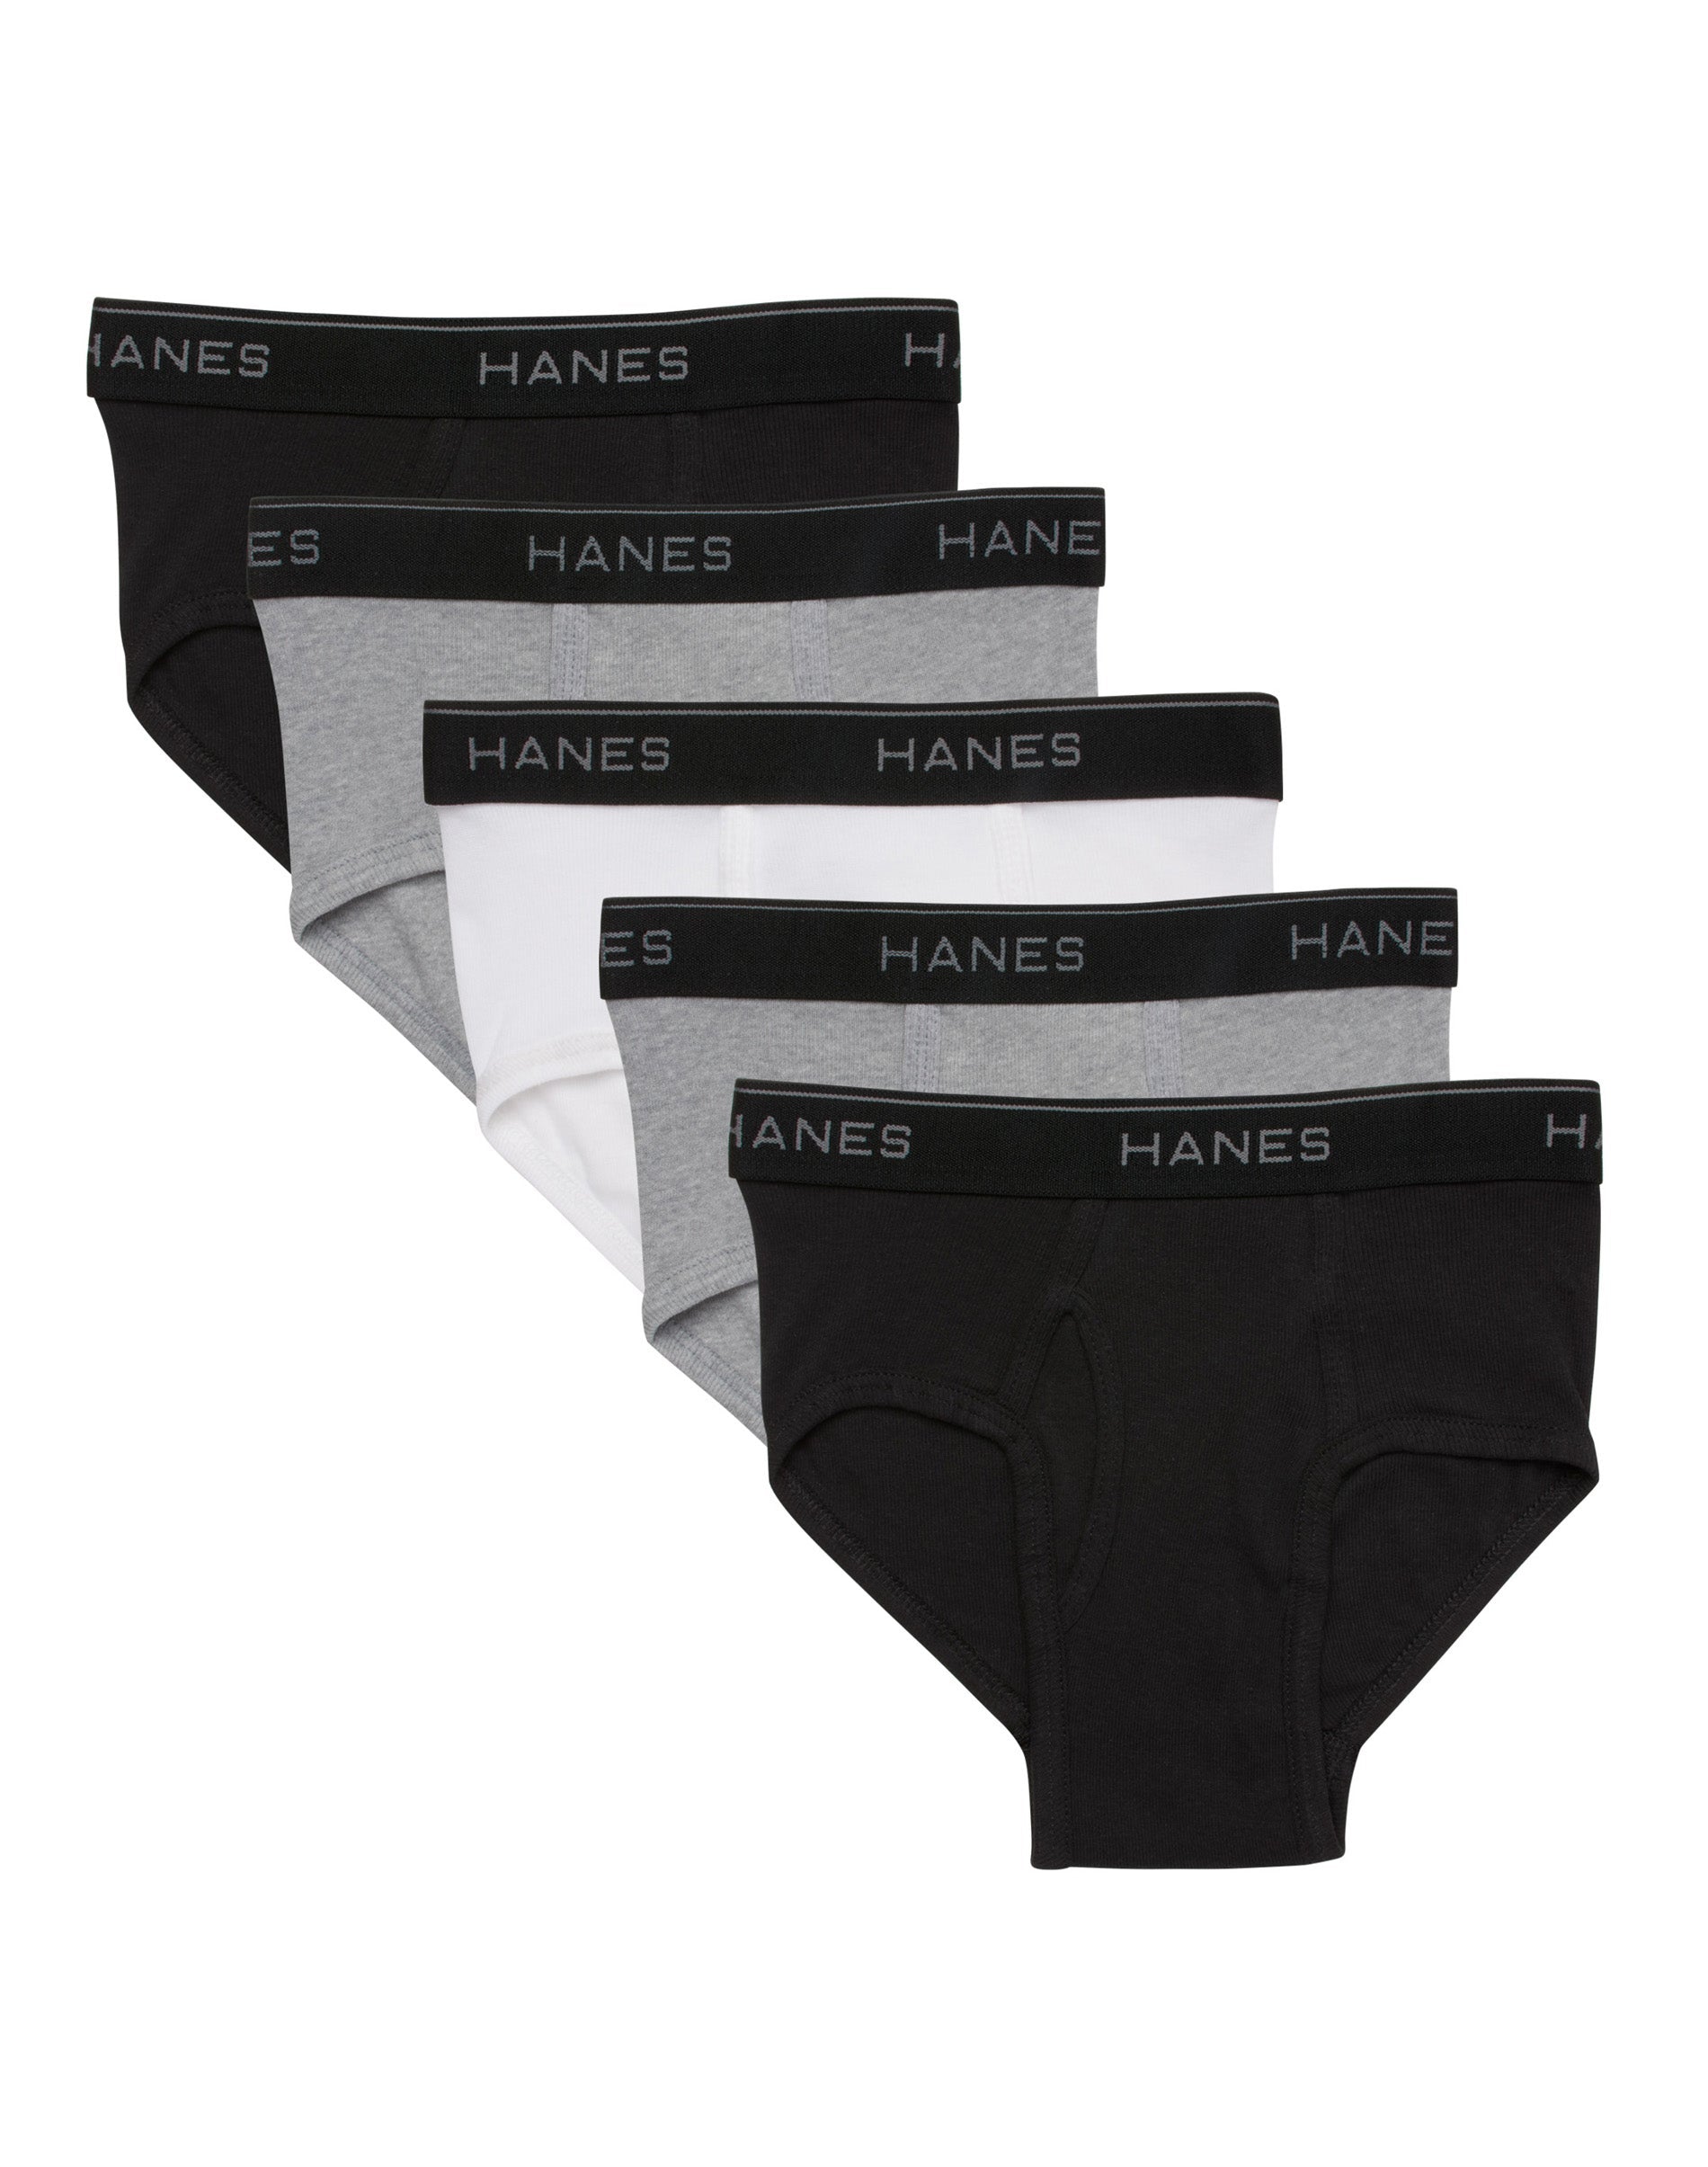 Hanes Ultimate Men's Boxer Brief Underwear, Ringer Style, 5-Pack